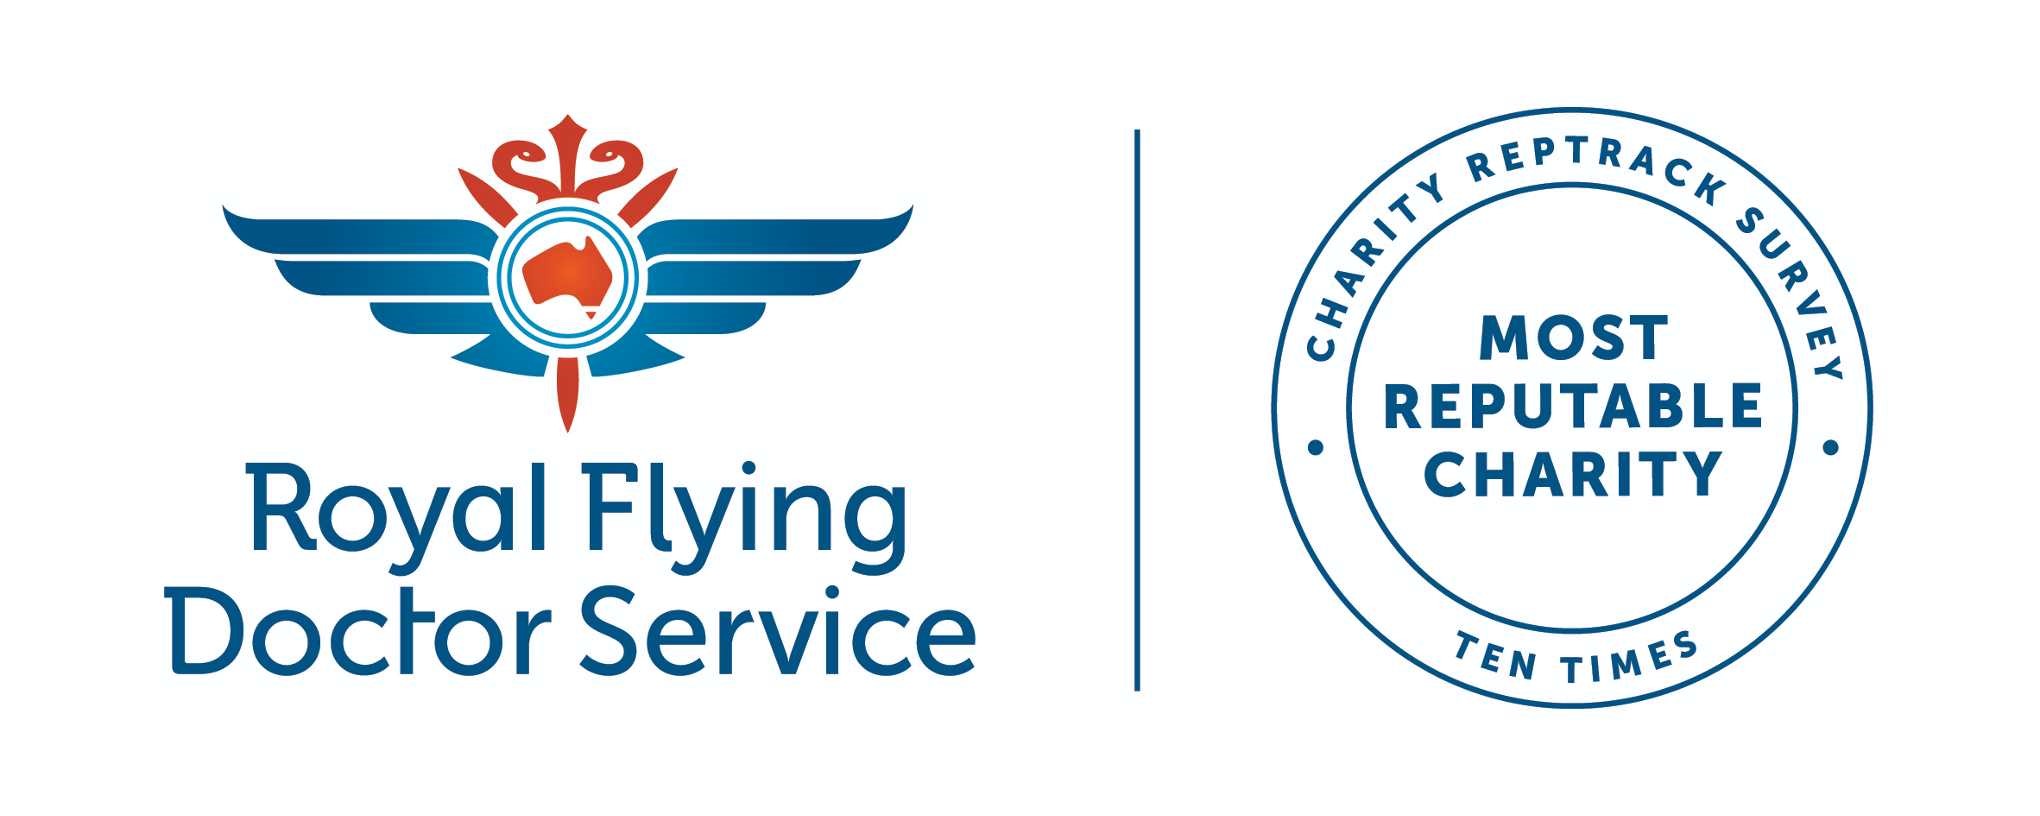 Royal flying doctor service logo